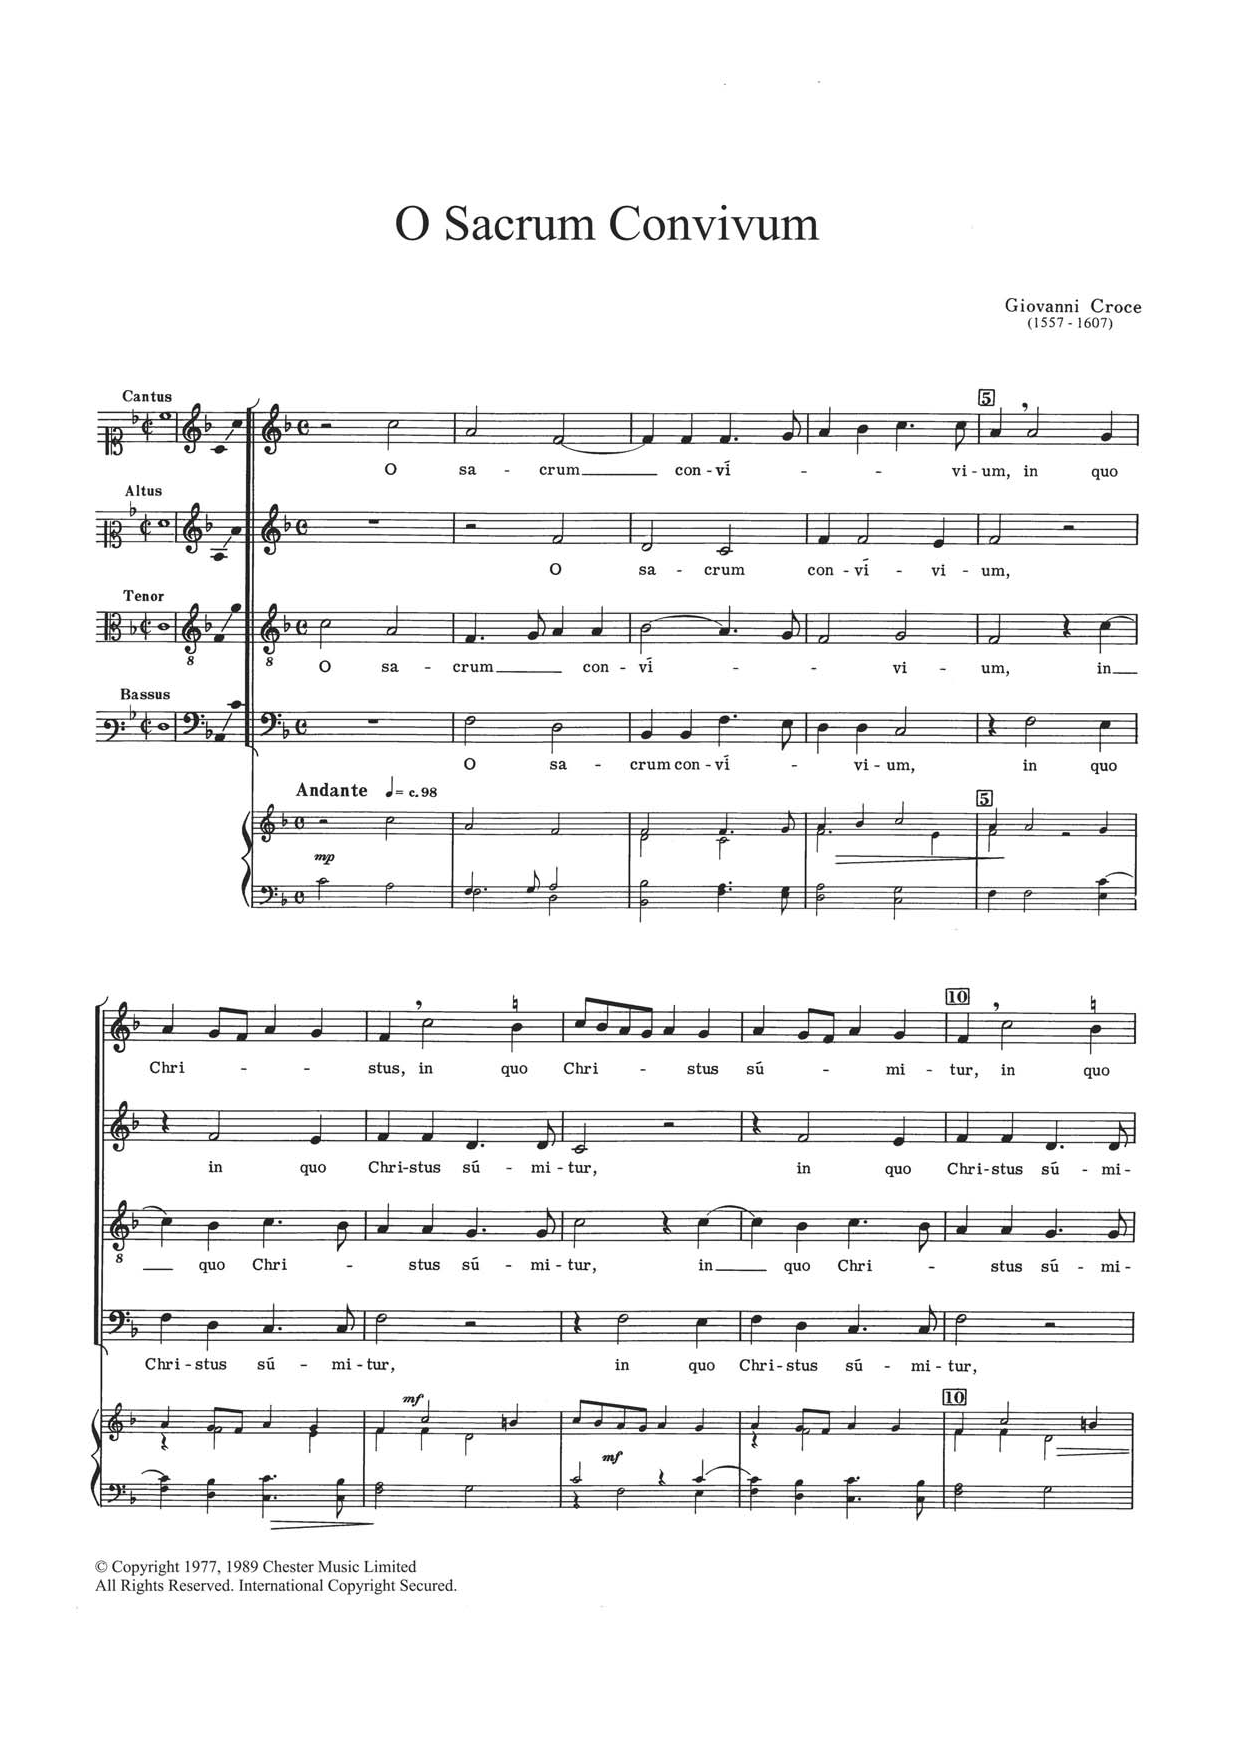 Giovanni Croce O Sacrum Convivium sheet music notes and chords arranged for Choir